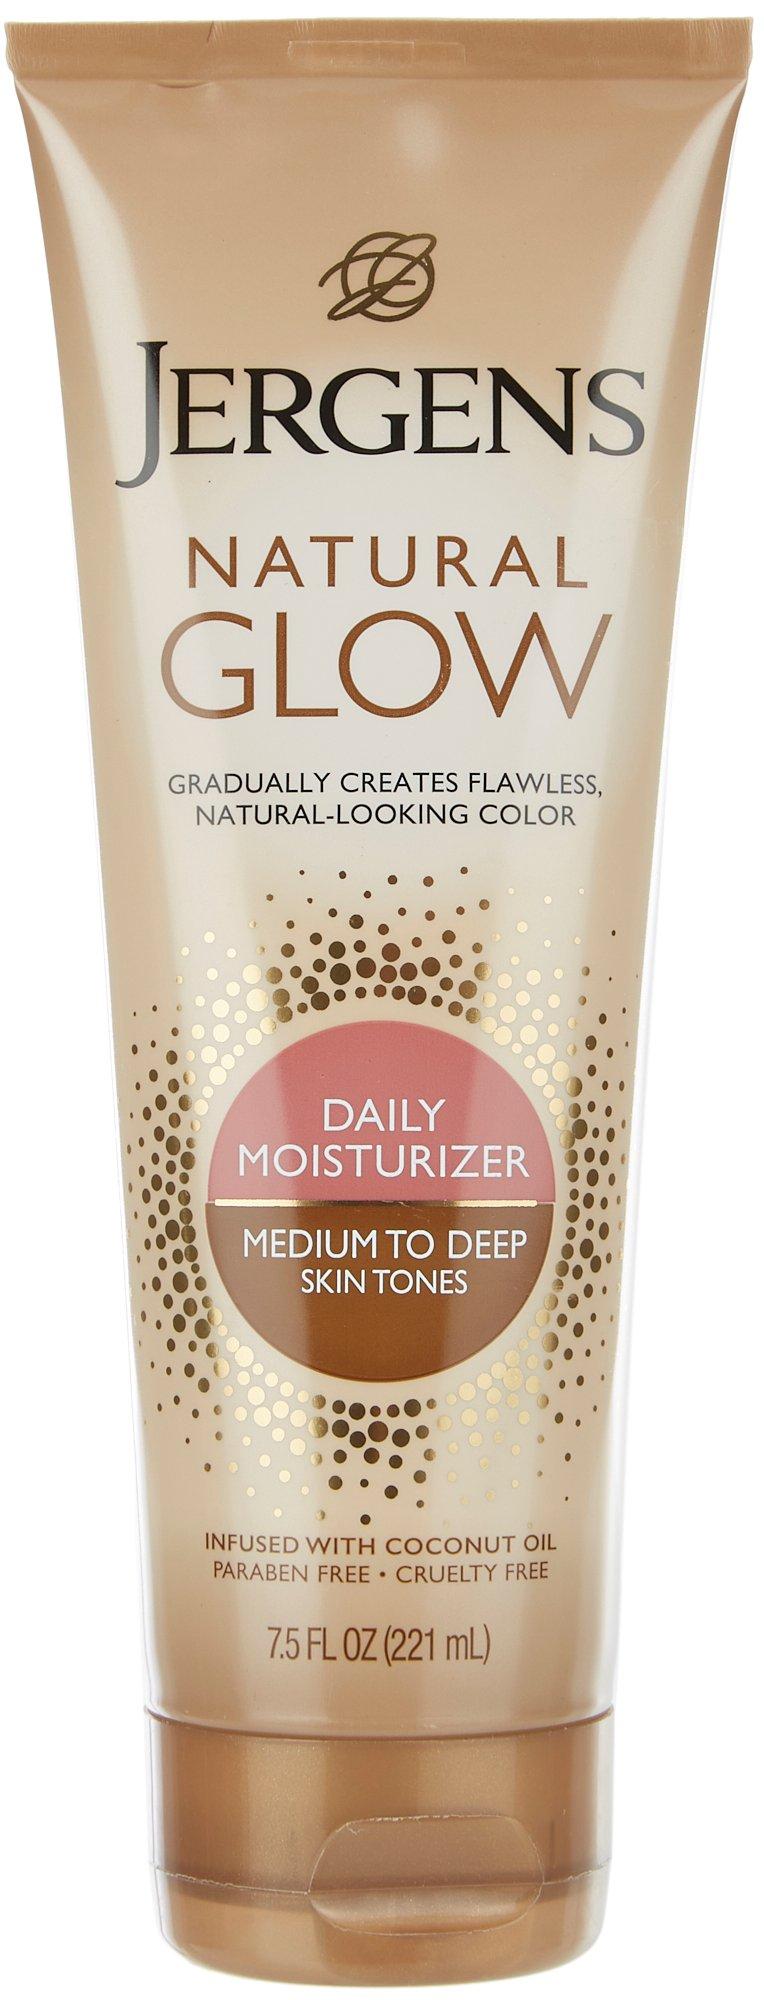 Natural Glow Medium To Deep Daily Moisturizer